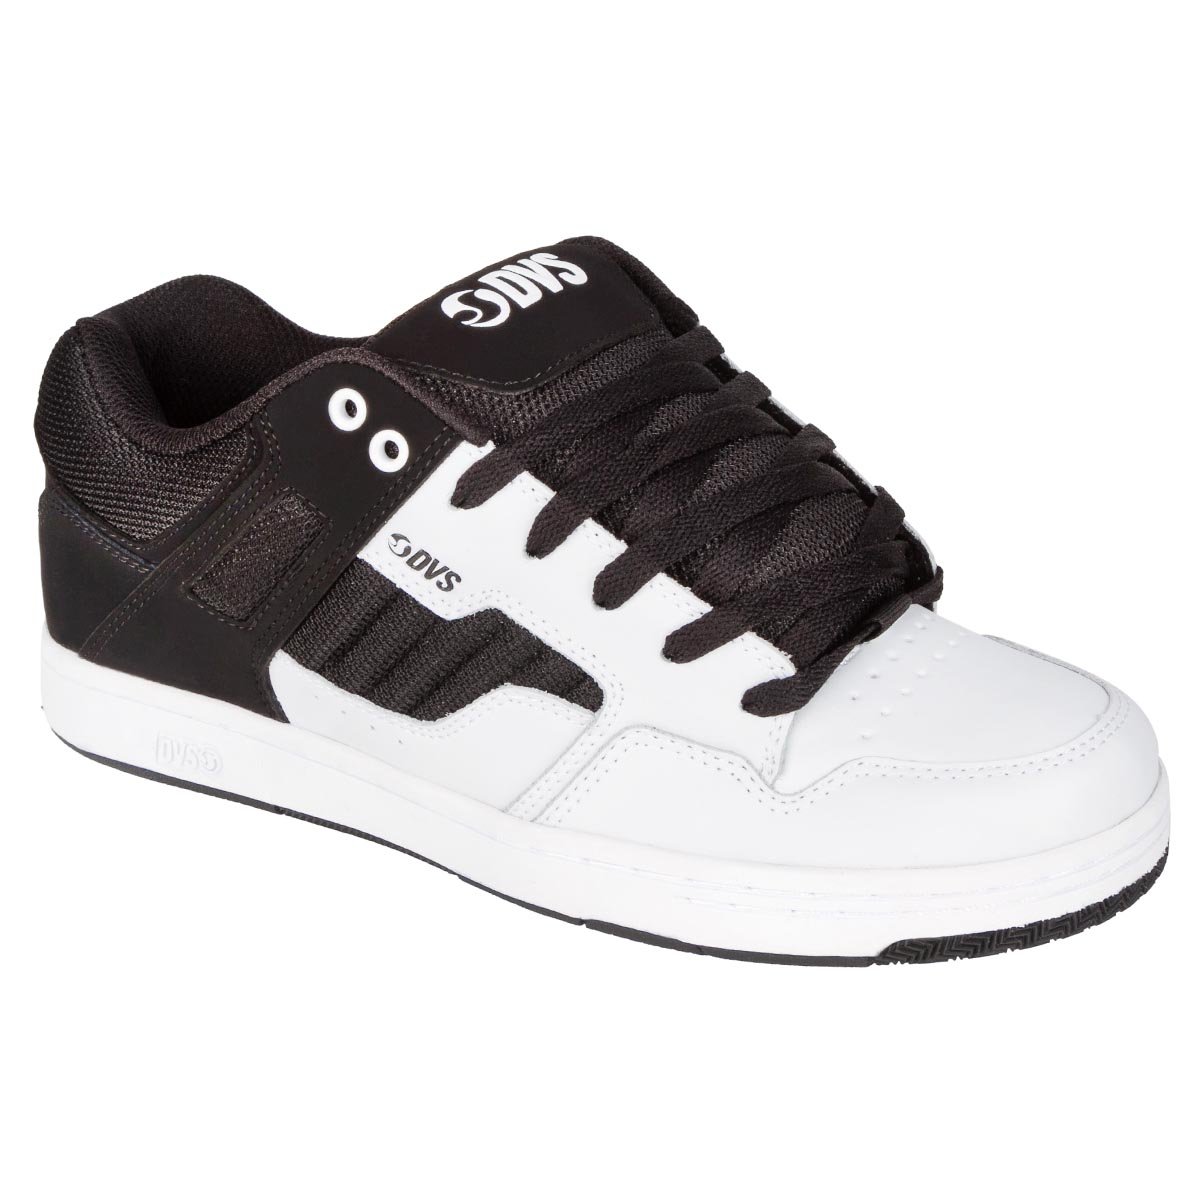 DVS Chaussures Enduro 125 White Black Leather